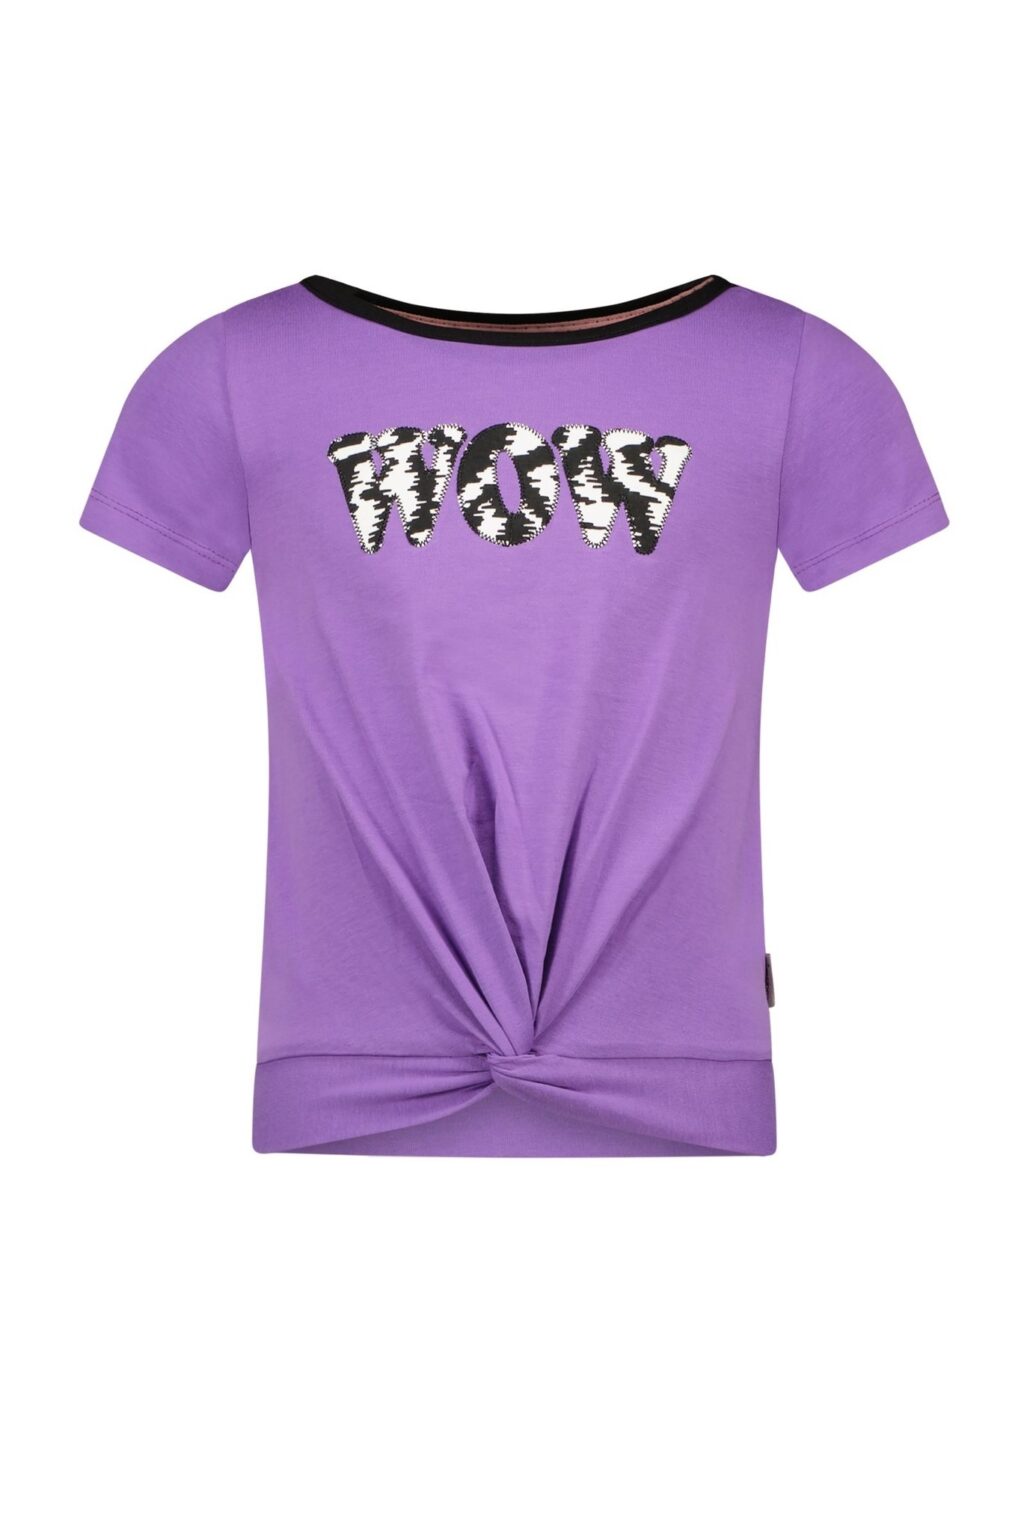 B.Nosy Meisjes t-shirt fancy artwork - Grape paars ~ Spinze.nl